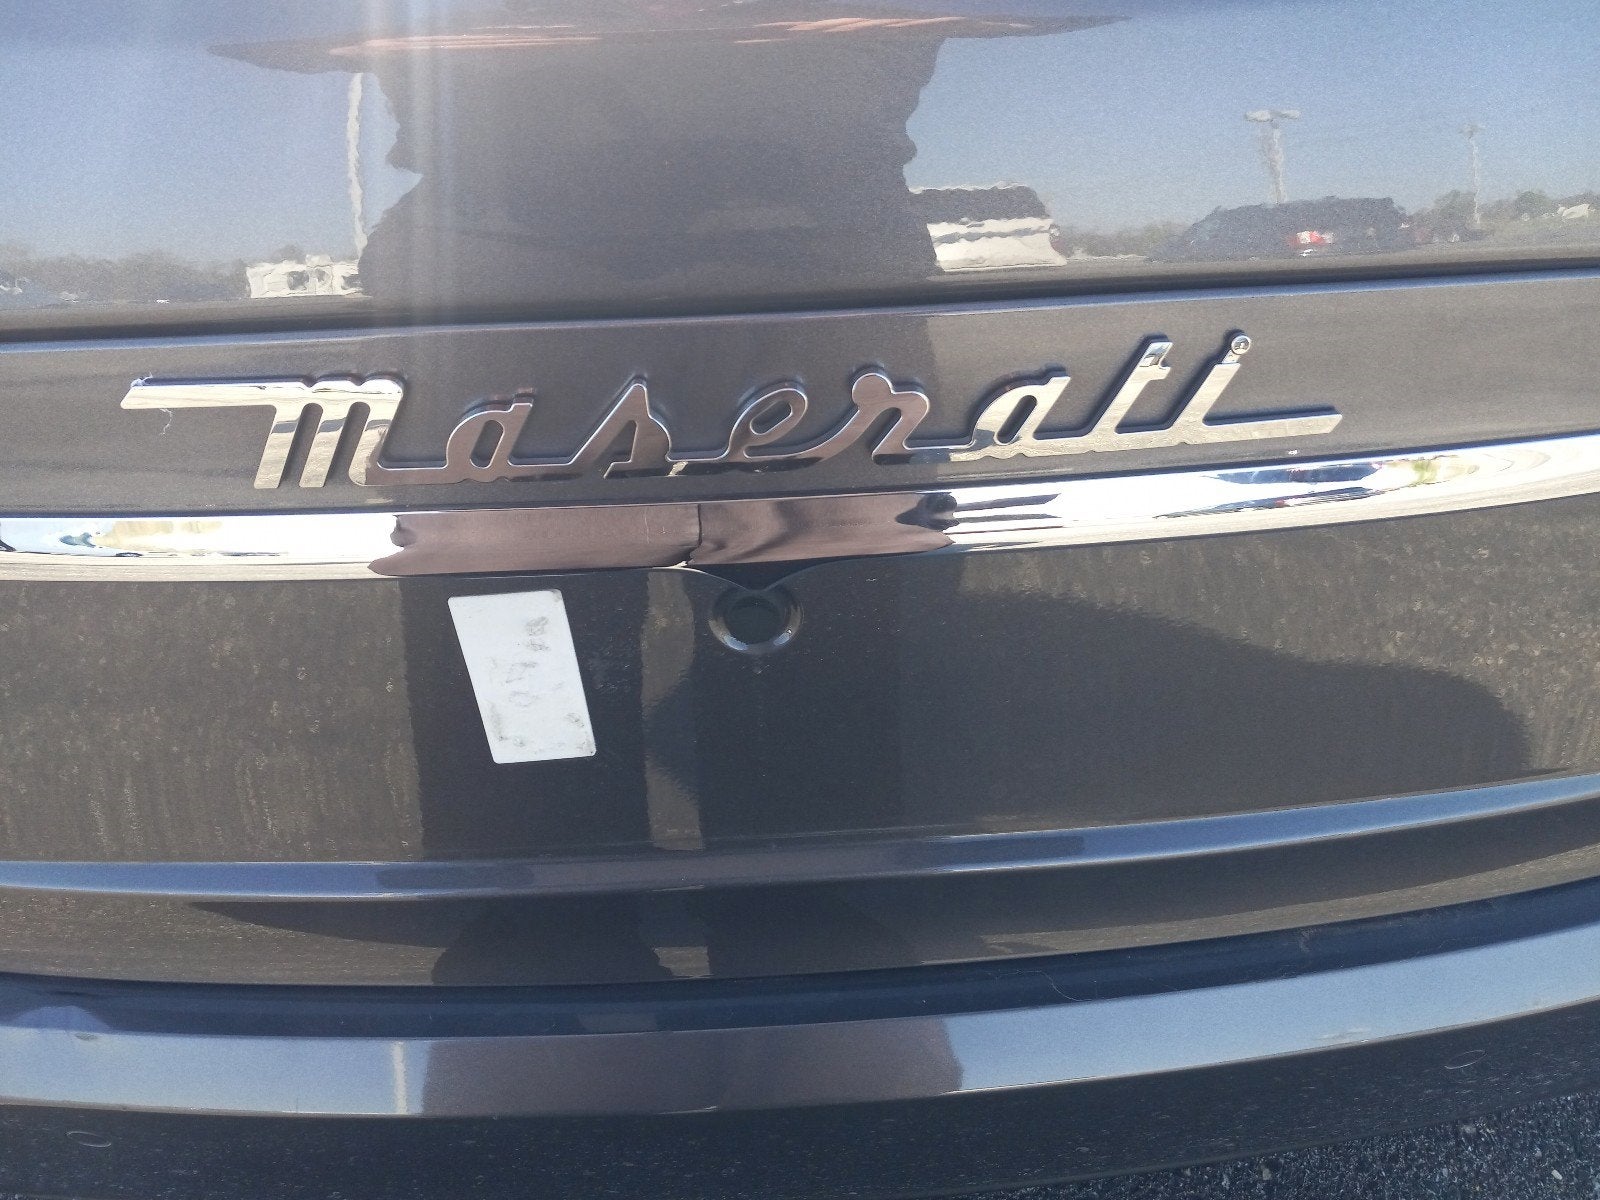 2015 Maserati Ghibli S Q4